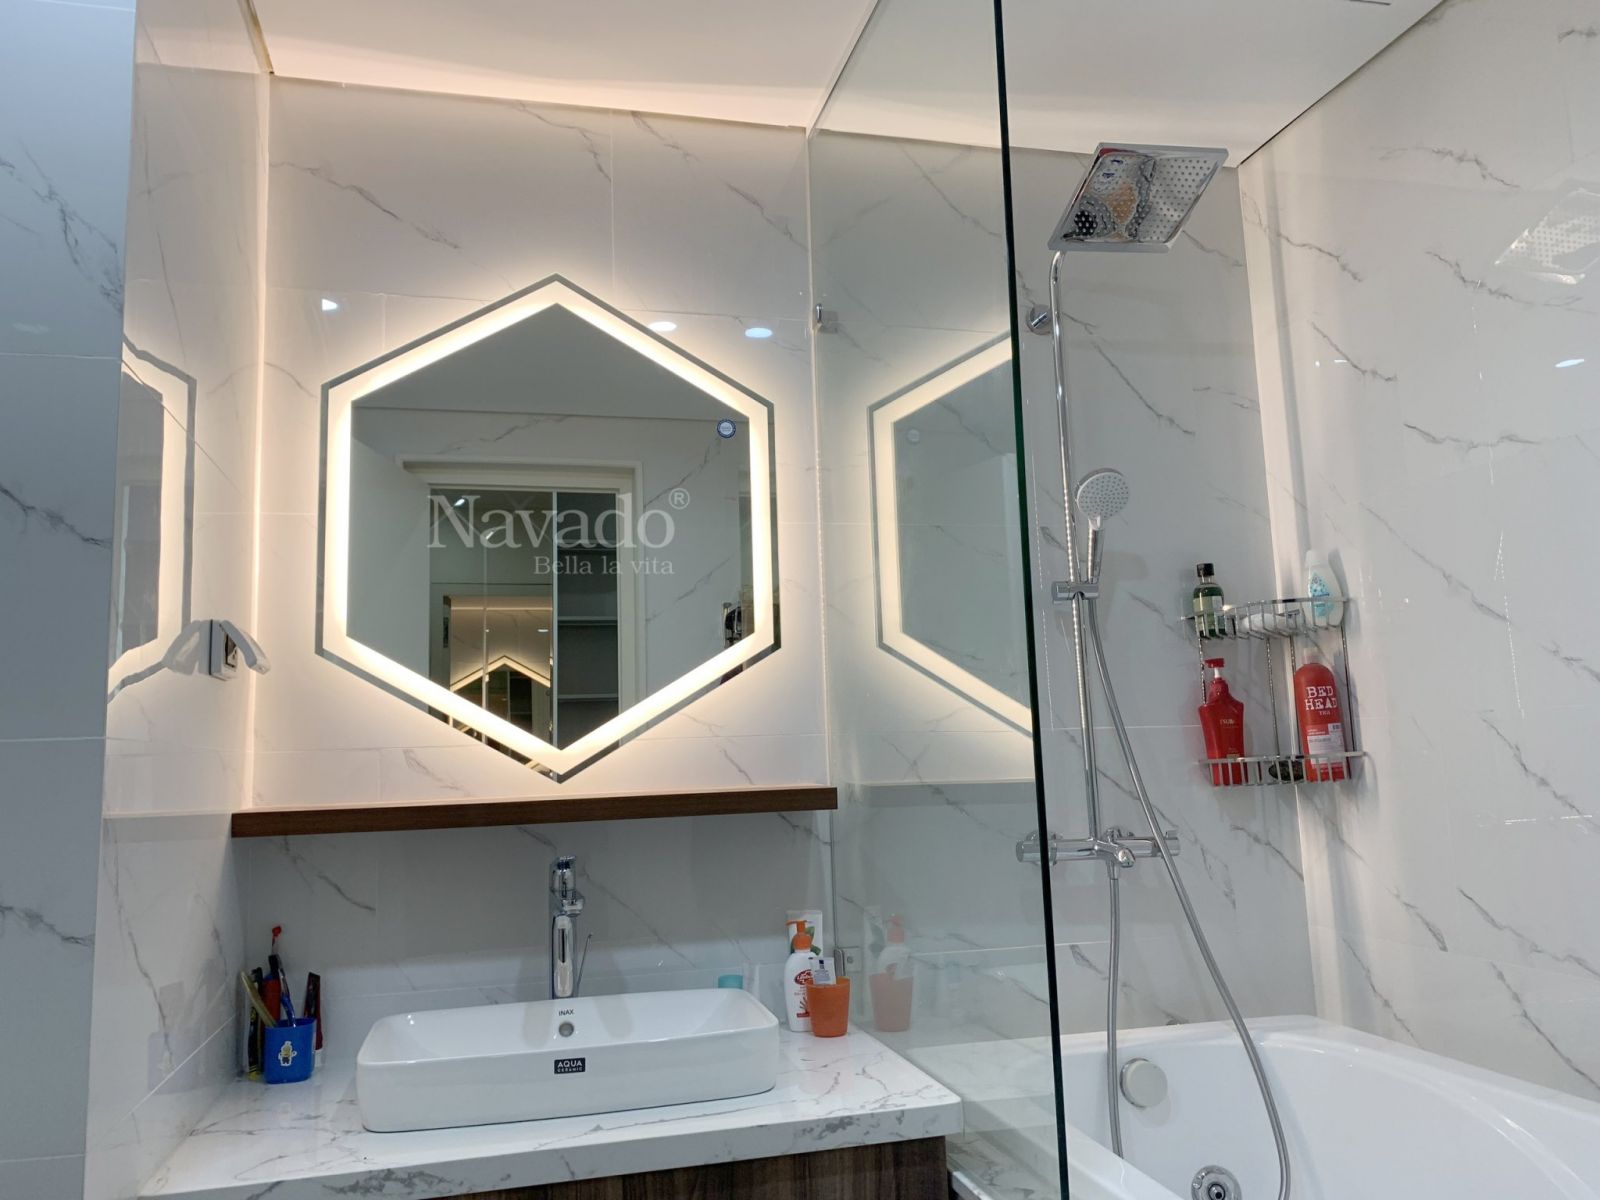 hexagon-decorat-led-bathroom-mirror